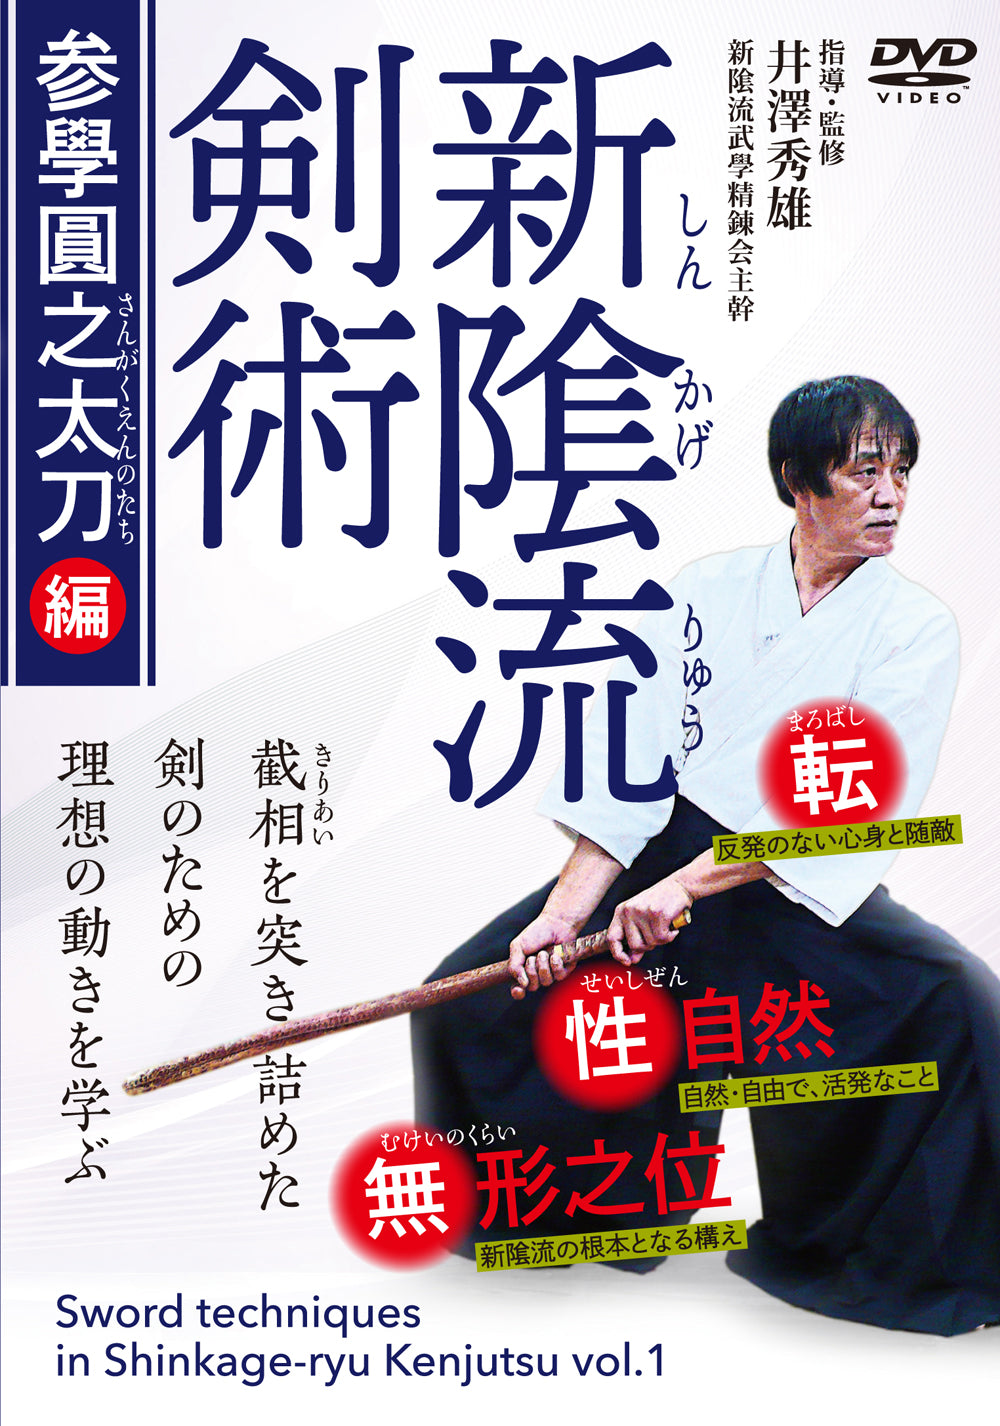 Sword Techniques in Shinkage Ryu Kenjutsu DVD 1 by Hideo Izawa - Budovideos